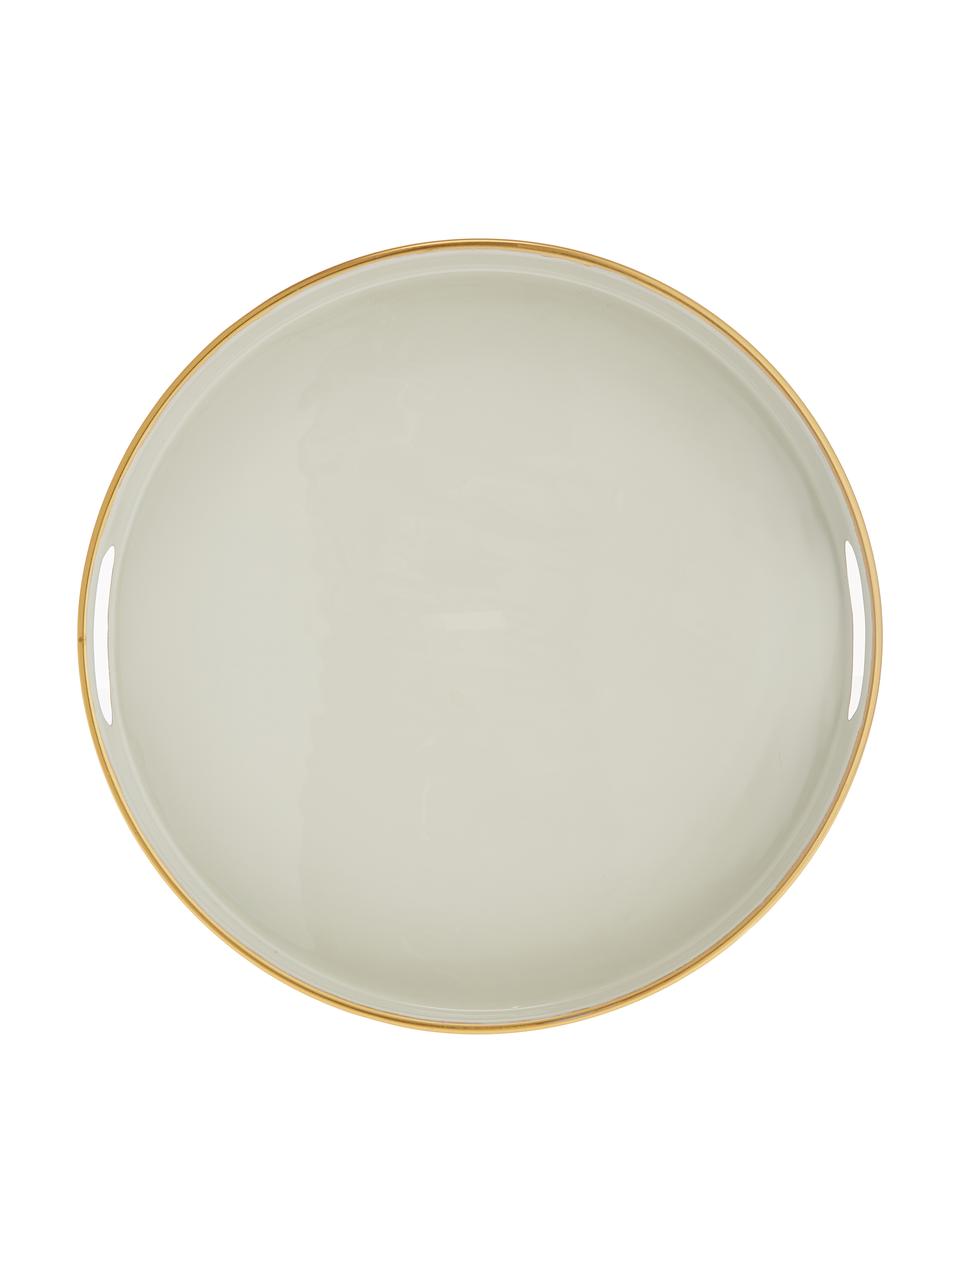 Rundes Serviertablett Dining, Metall, beschichtet, Hellgrau, Goldfarben, Ø 38 x H 5 cm